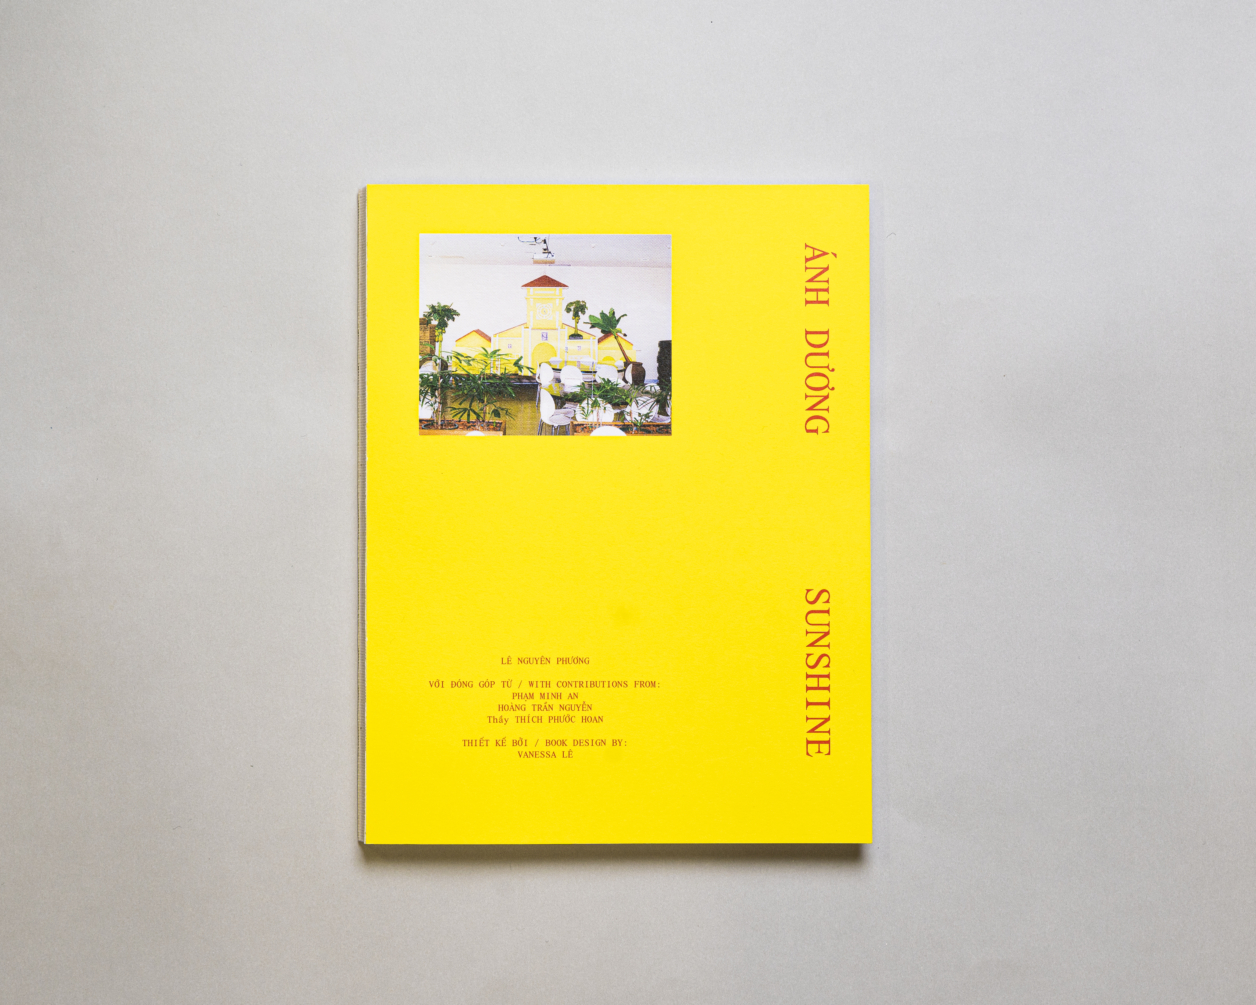 Sunshine book by Le Phuong Nguyen